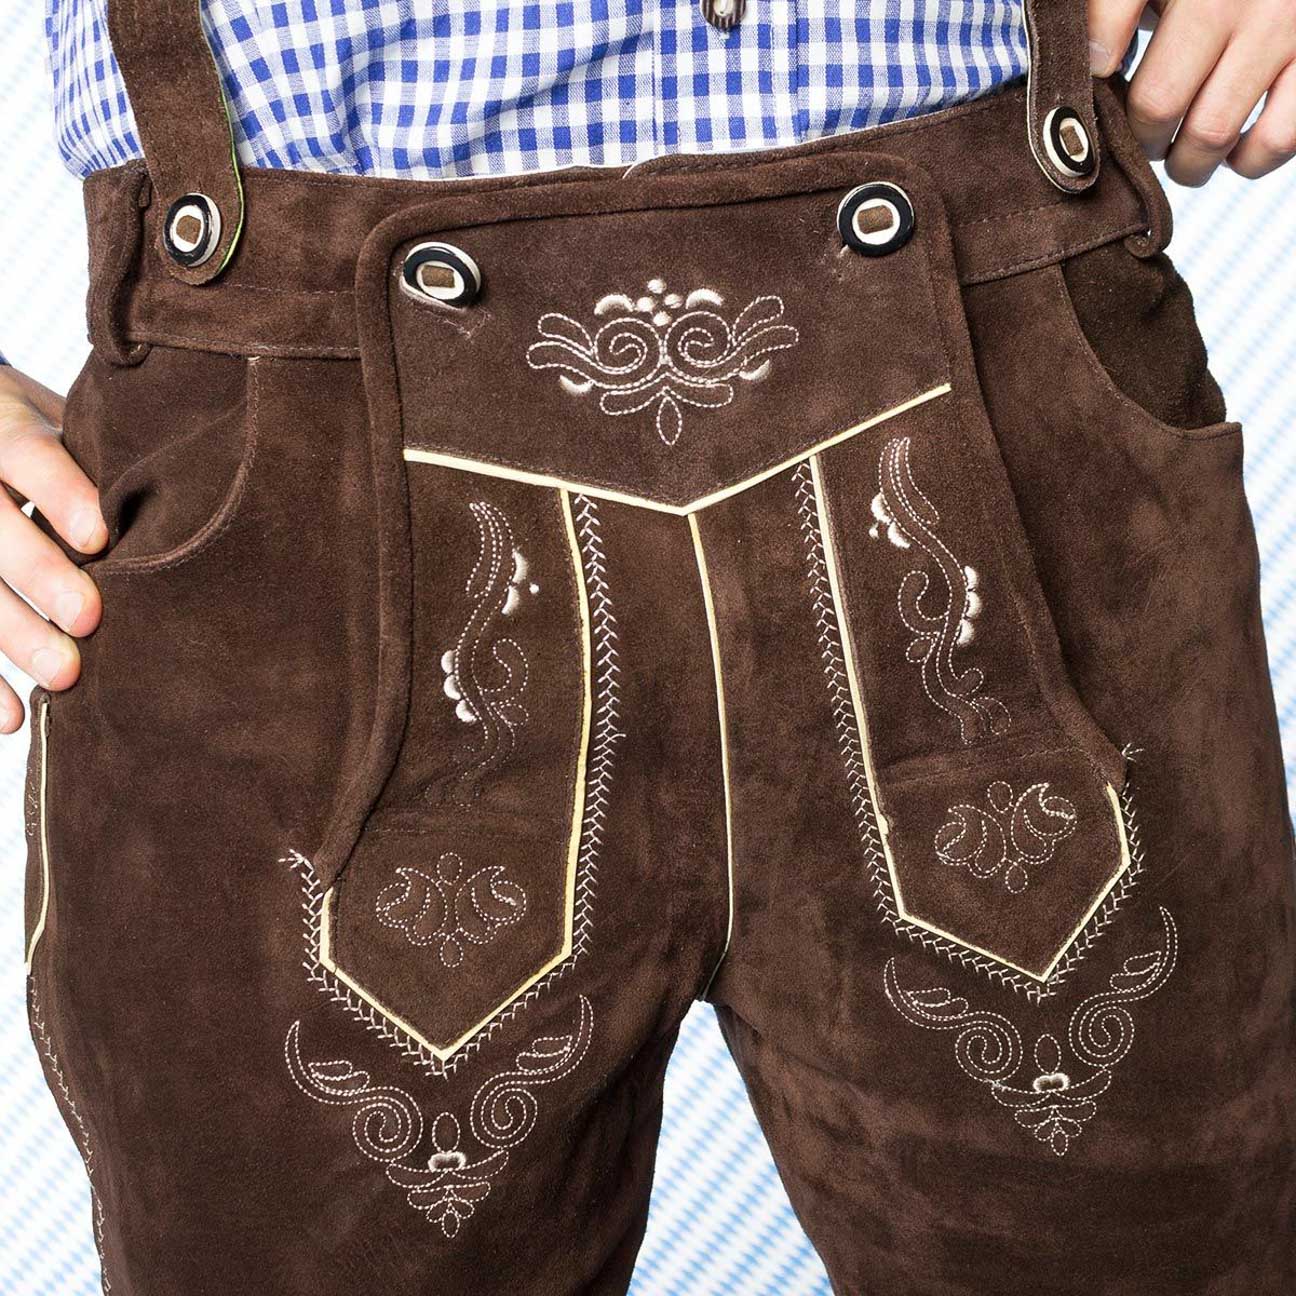 Bavarian Man Oktoberfest Leather Trousers Lederhose Stock Photo 61020256   Shutterstock